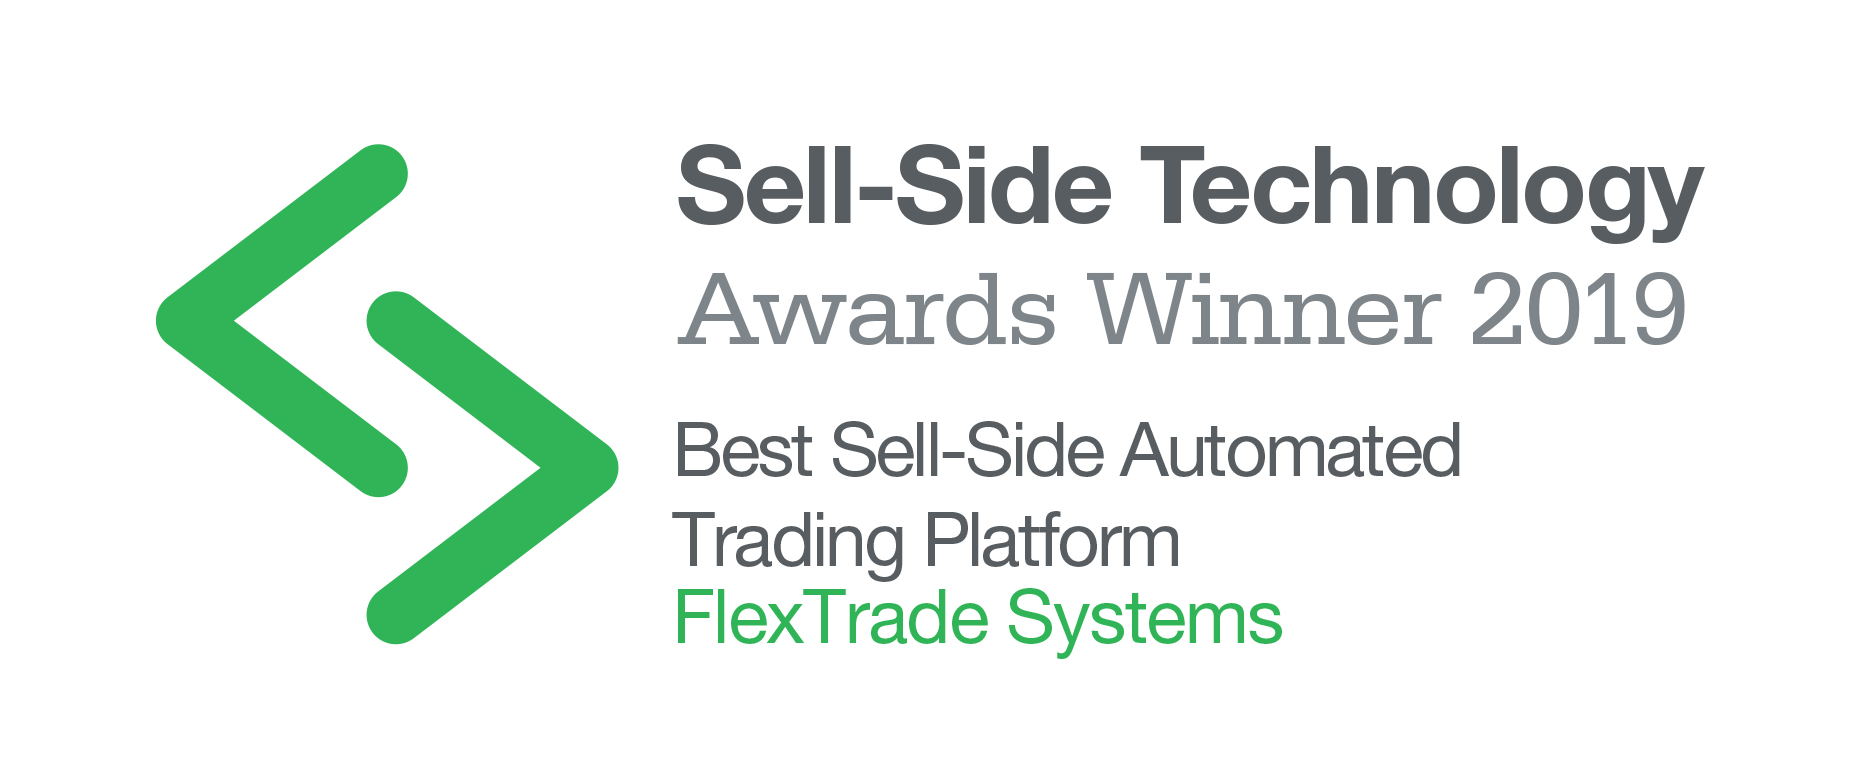 st Automated Trading Platform